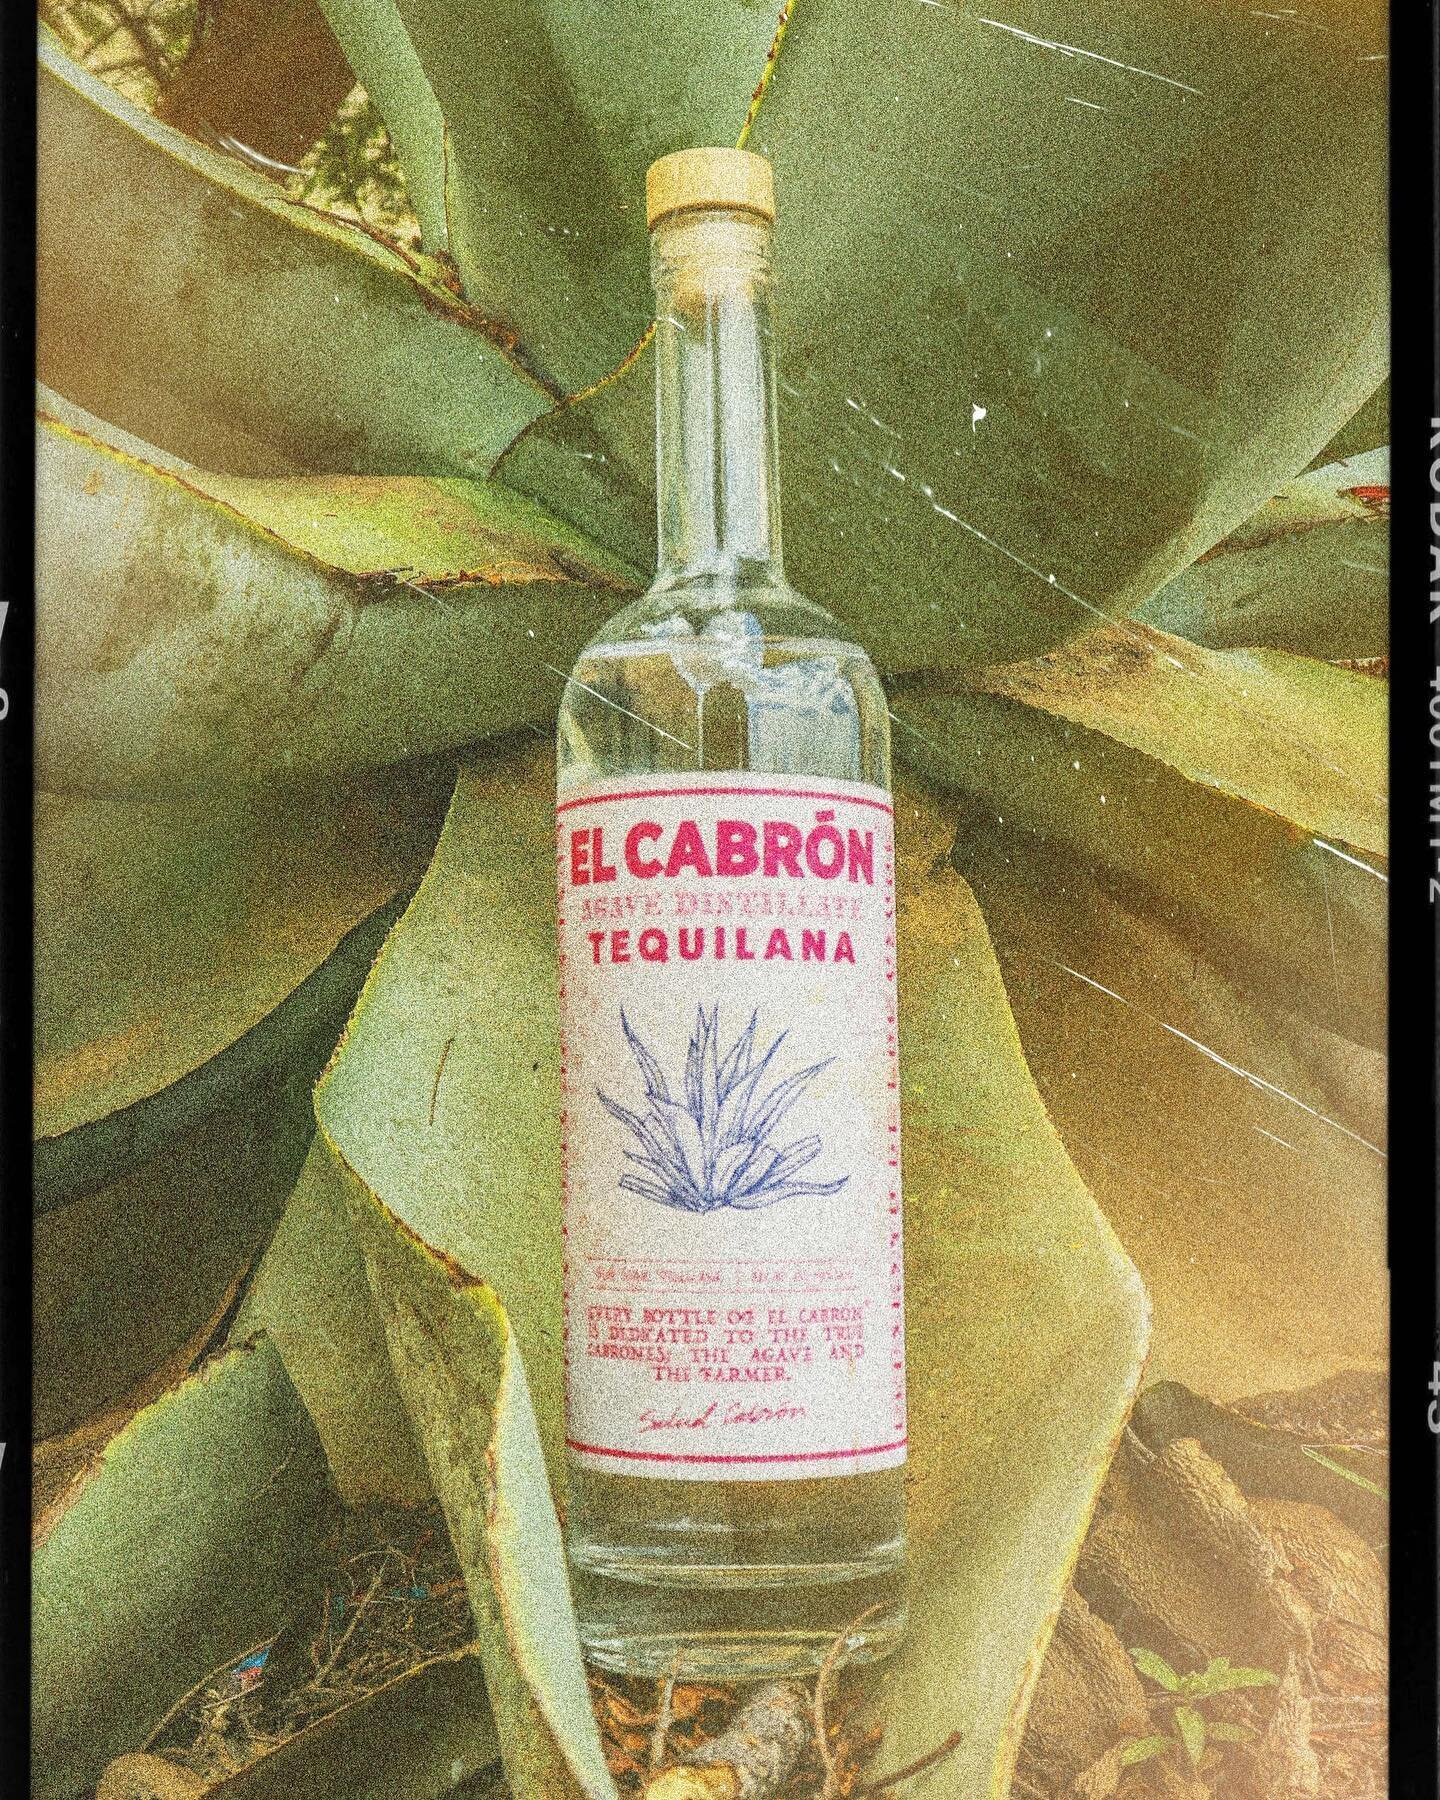 Happy Friday Cabr&oslash;nes #ElCabron

#SaludCabron #Agave #Mezcal #Tequila #Tequilana #BlueAgave #Spirit #Weekend #Art #Craft #party #Flavour #Drink #Tradition #Zacatecas #Mexico